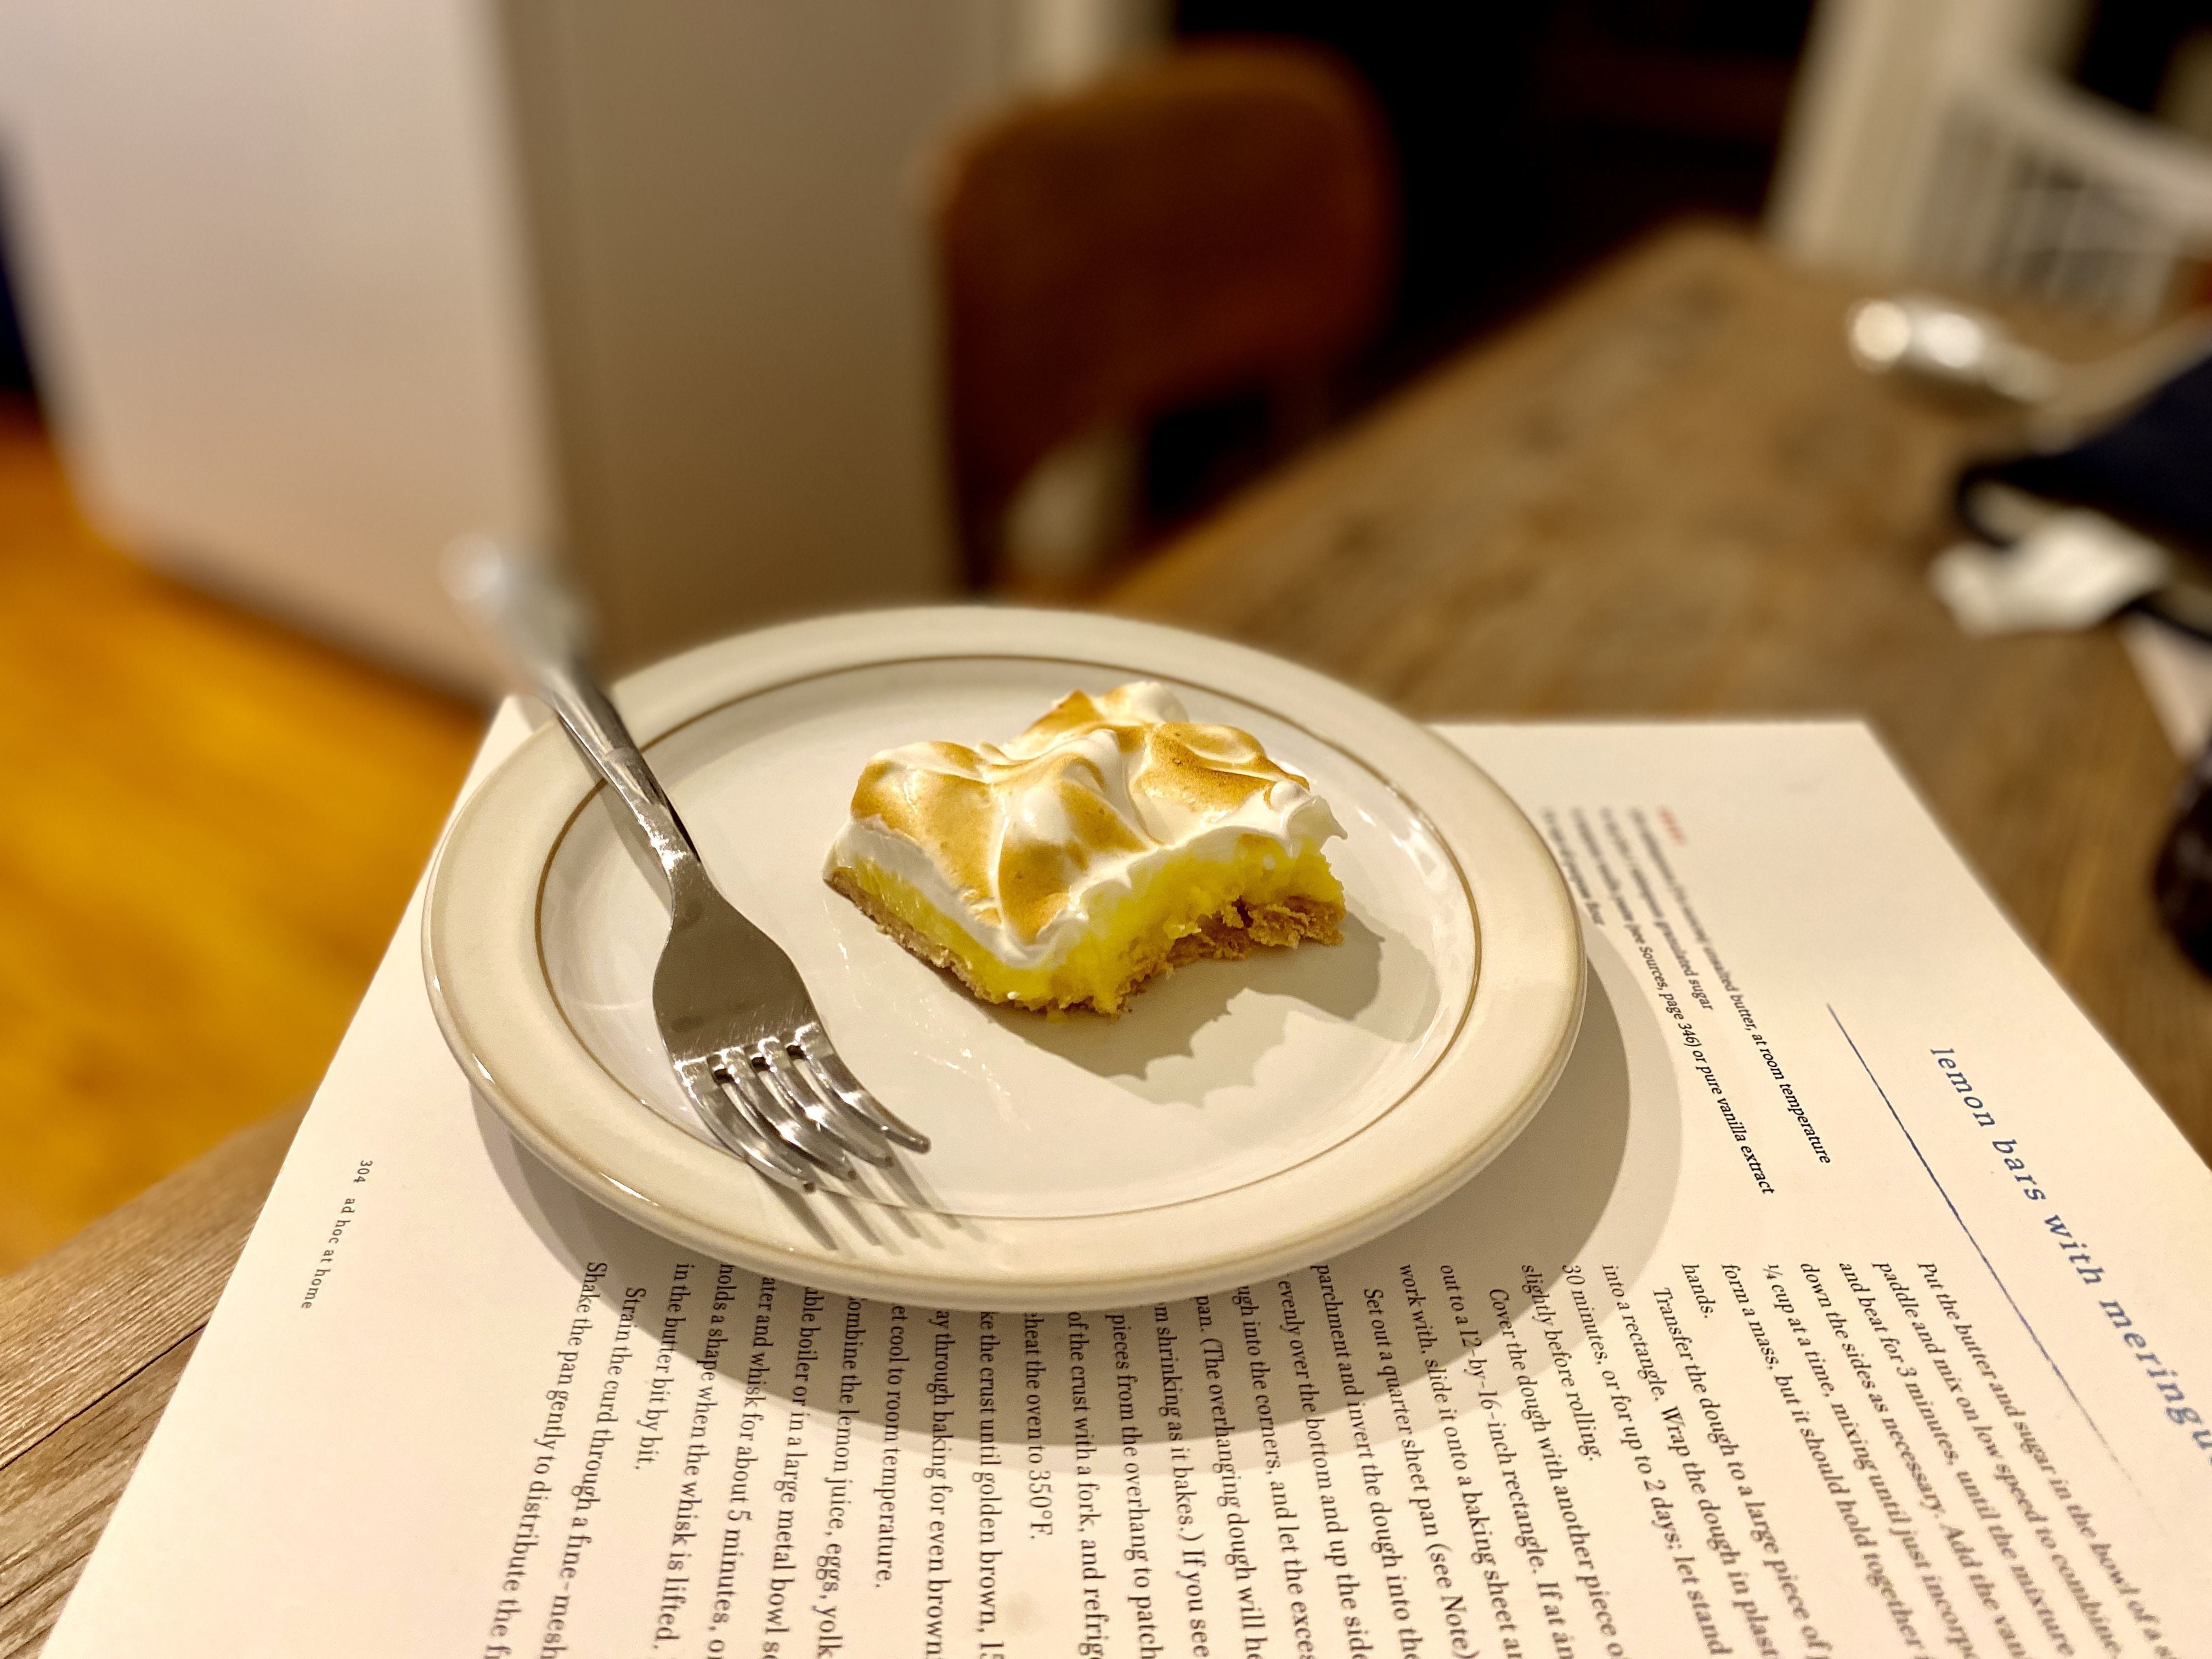 Lemon bars with meringue from Thomas Keller’s ‘Ad Hoc at Home.’